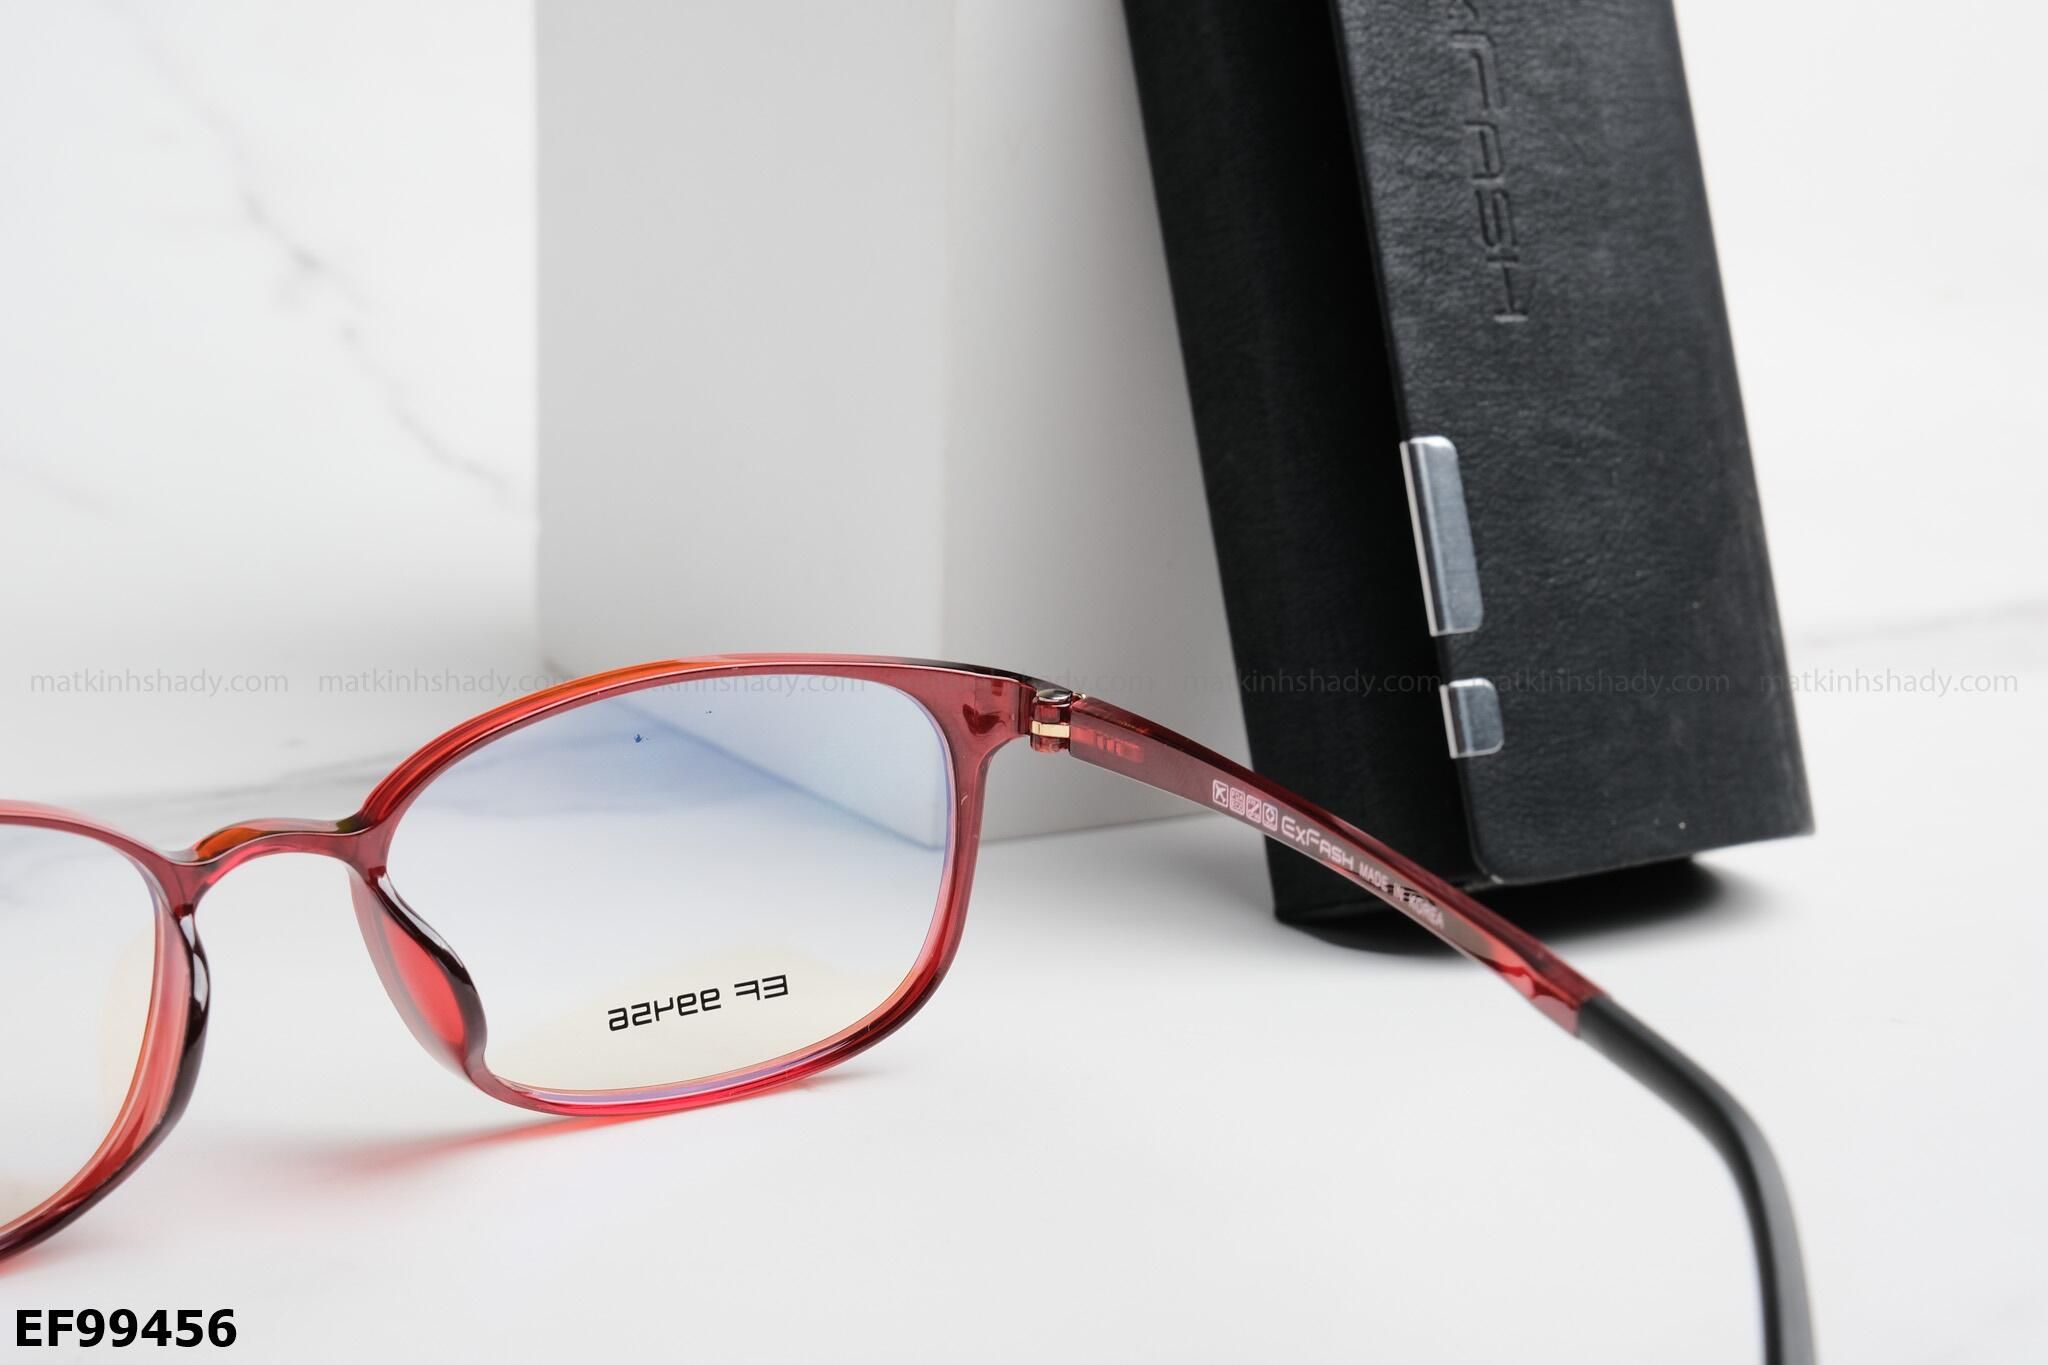  Exfash Eyewear - Glasses - EF99456 